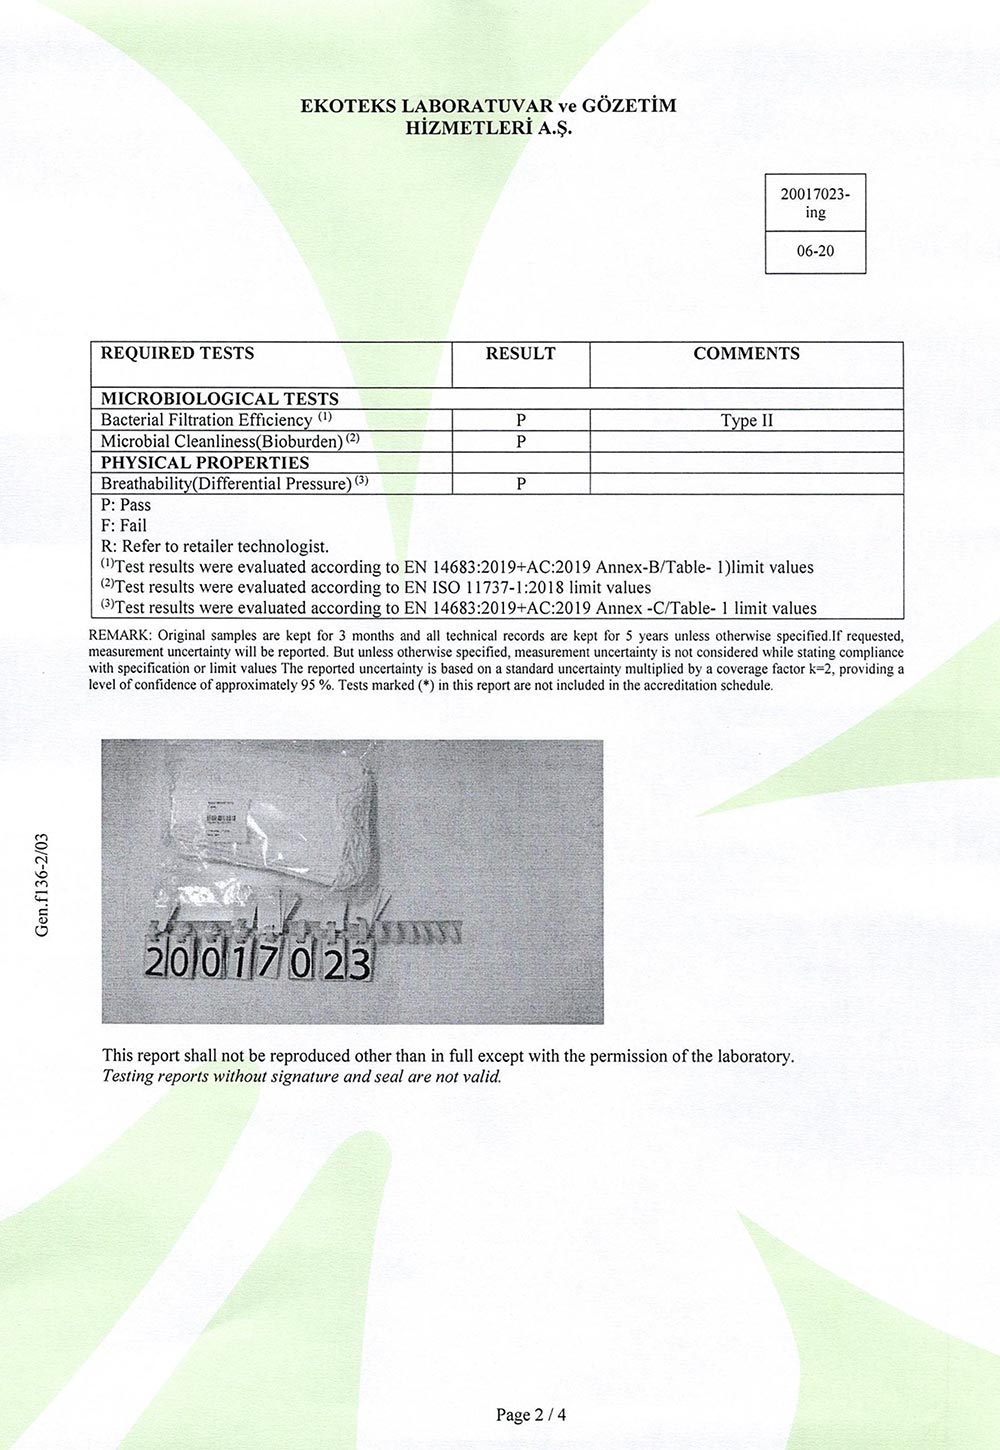 Certificate-Ekoteks-Test-Report-I-2